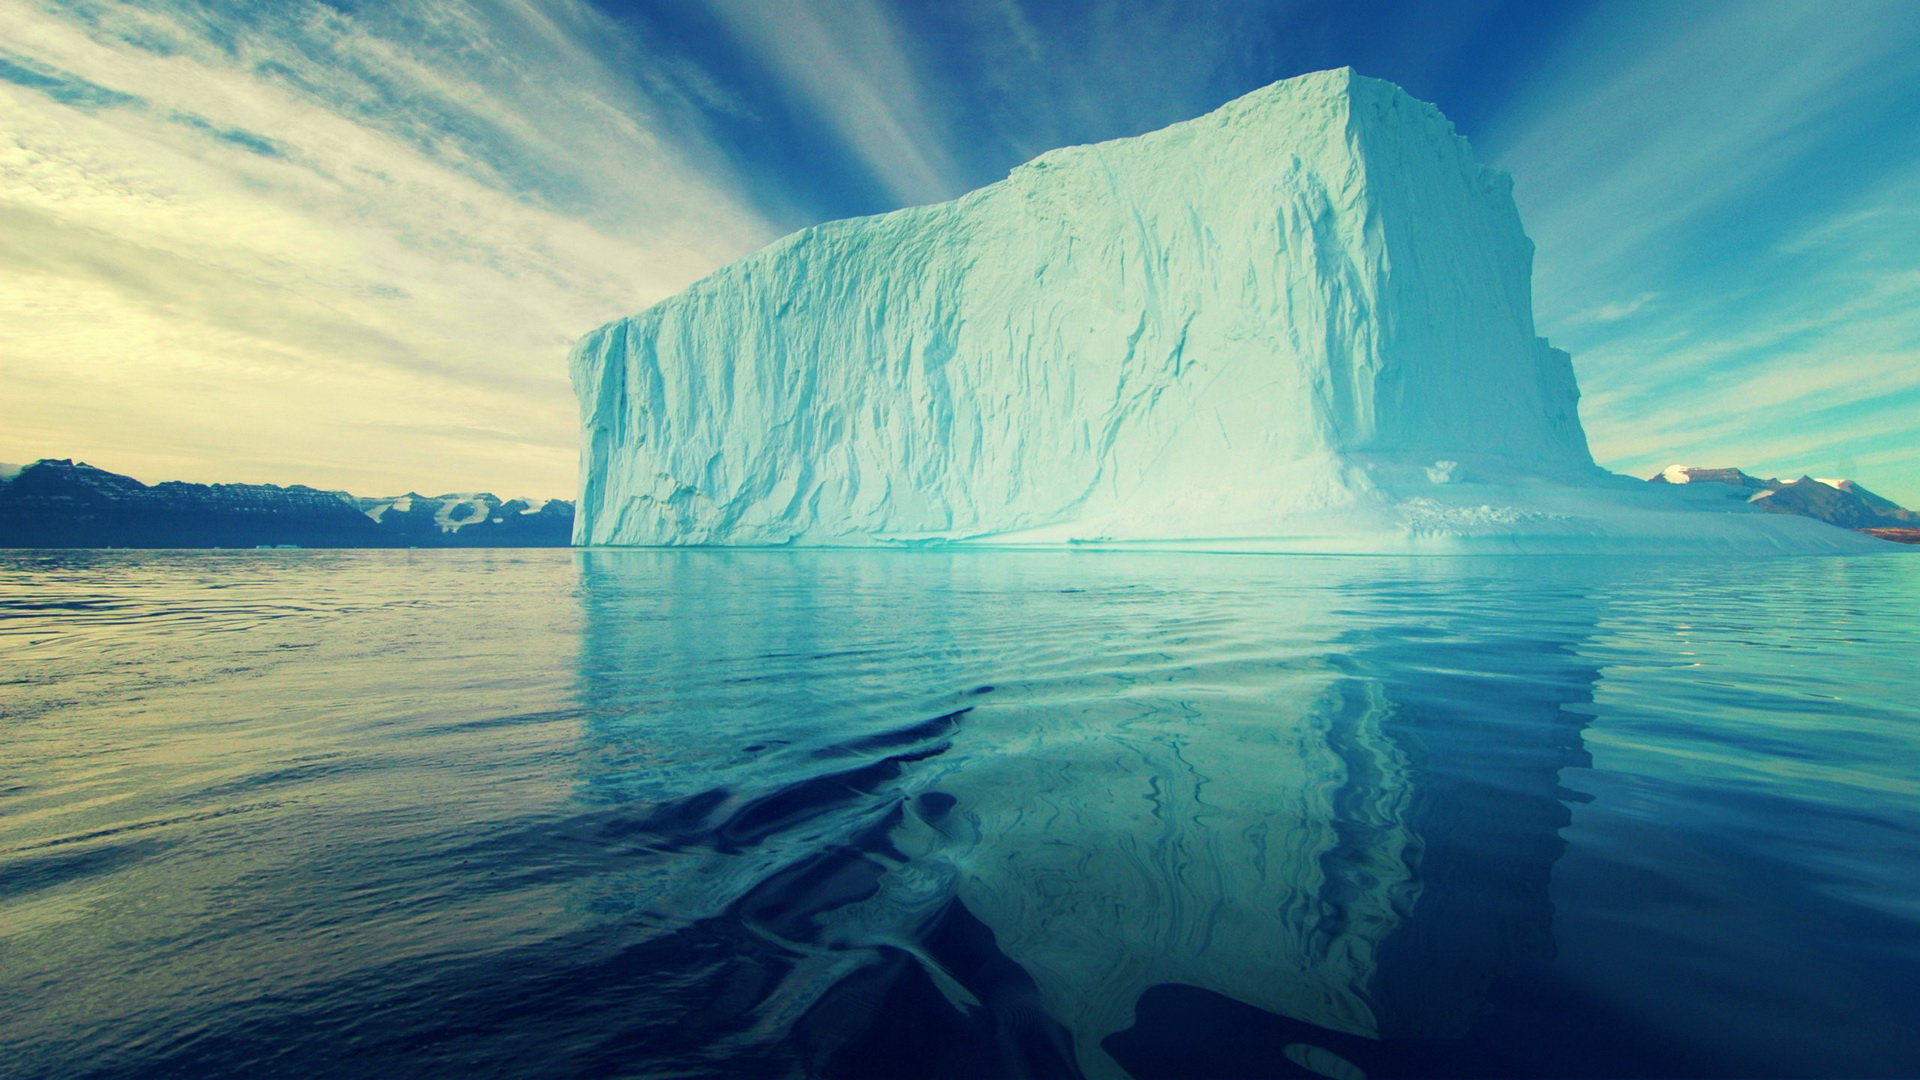 High resolution Iceberg full hd 1920x1080 background ID:61722 for desktop